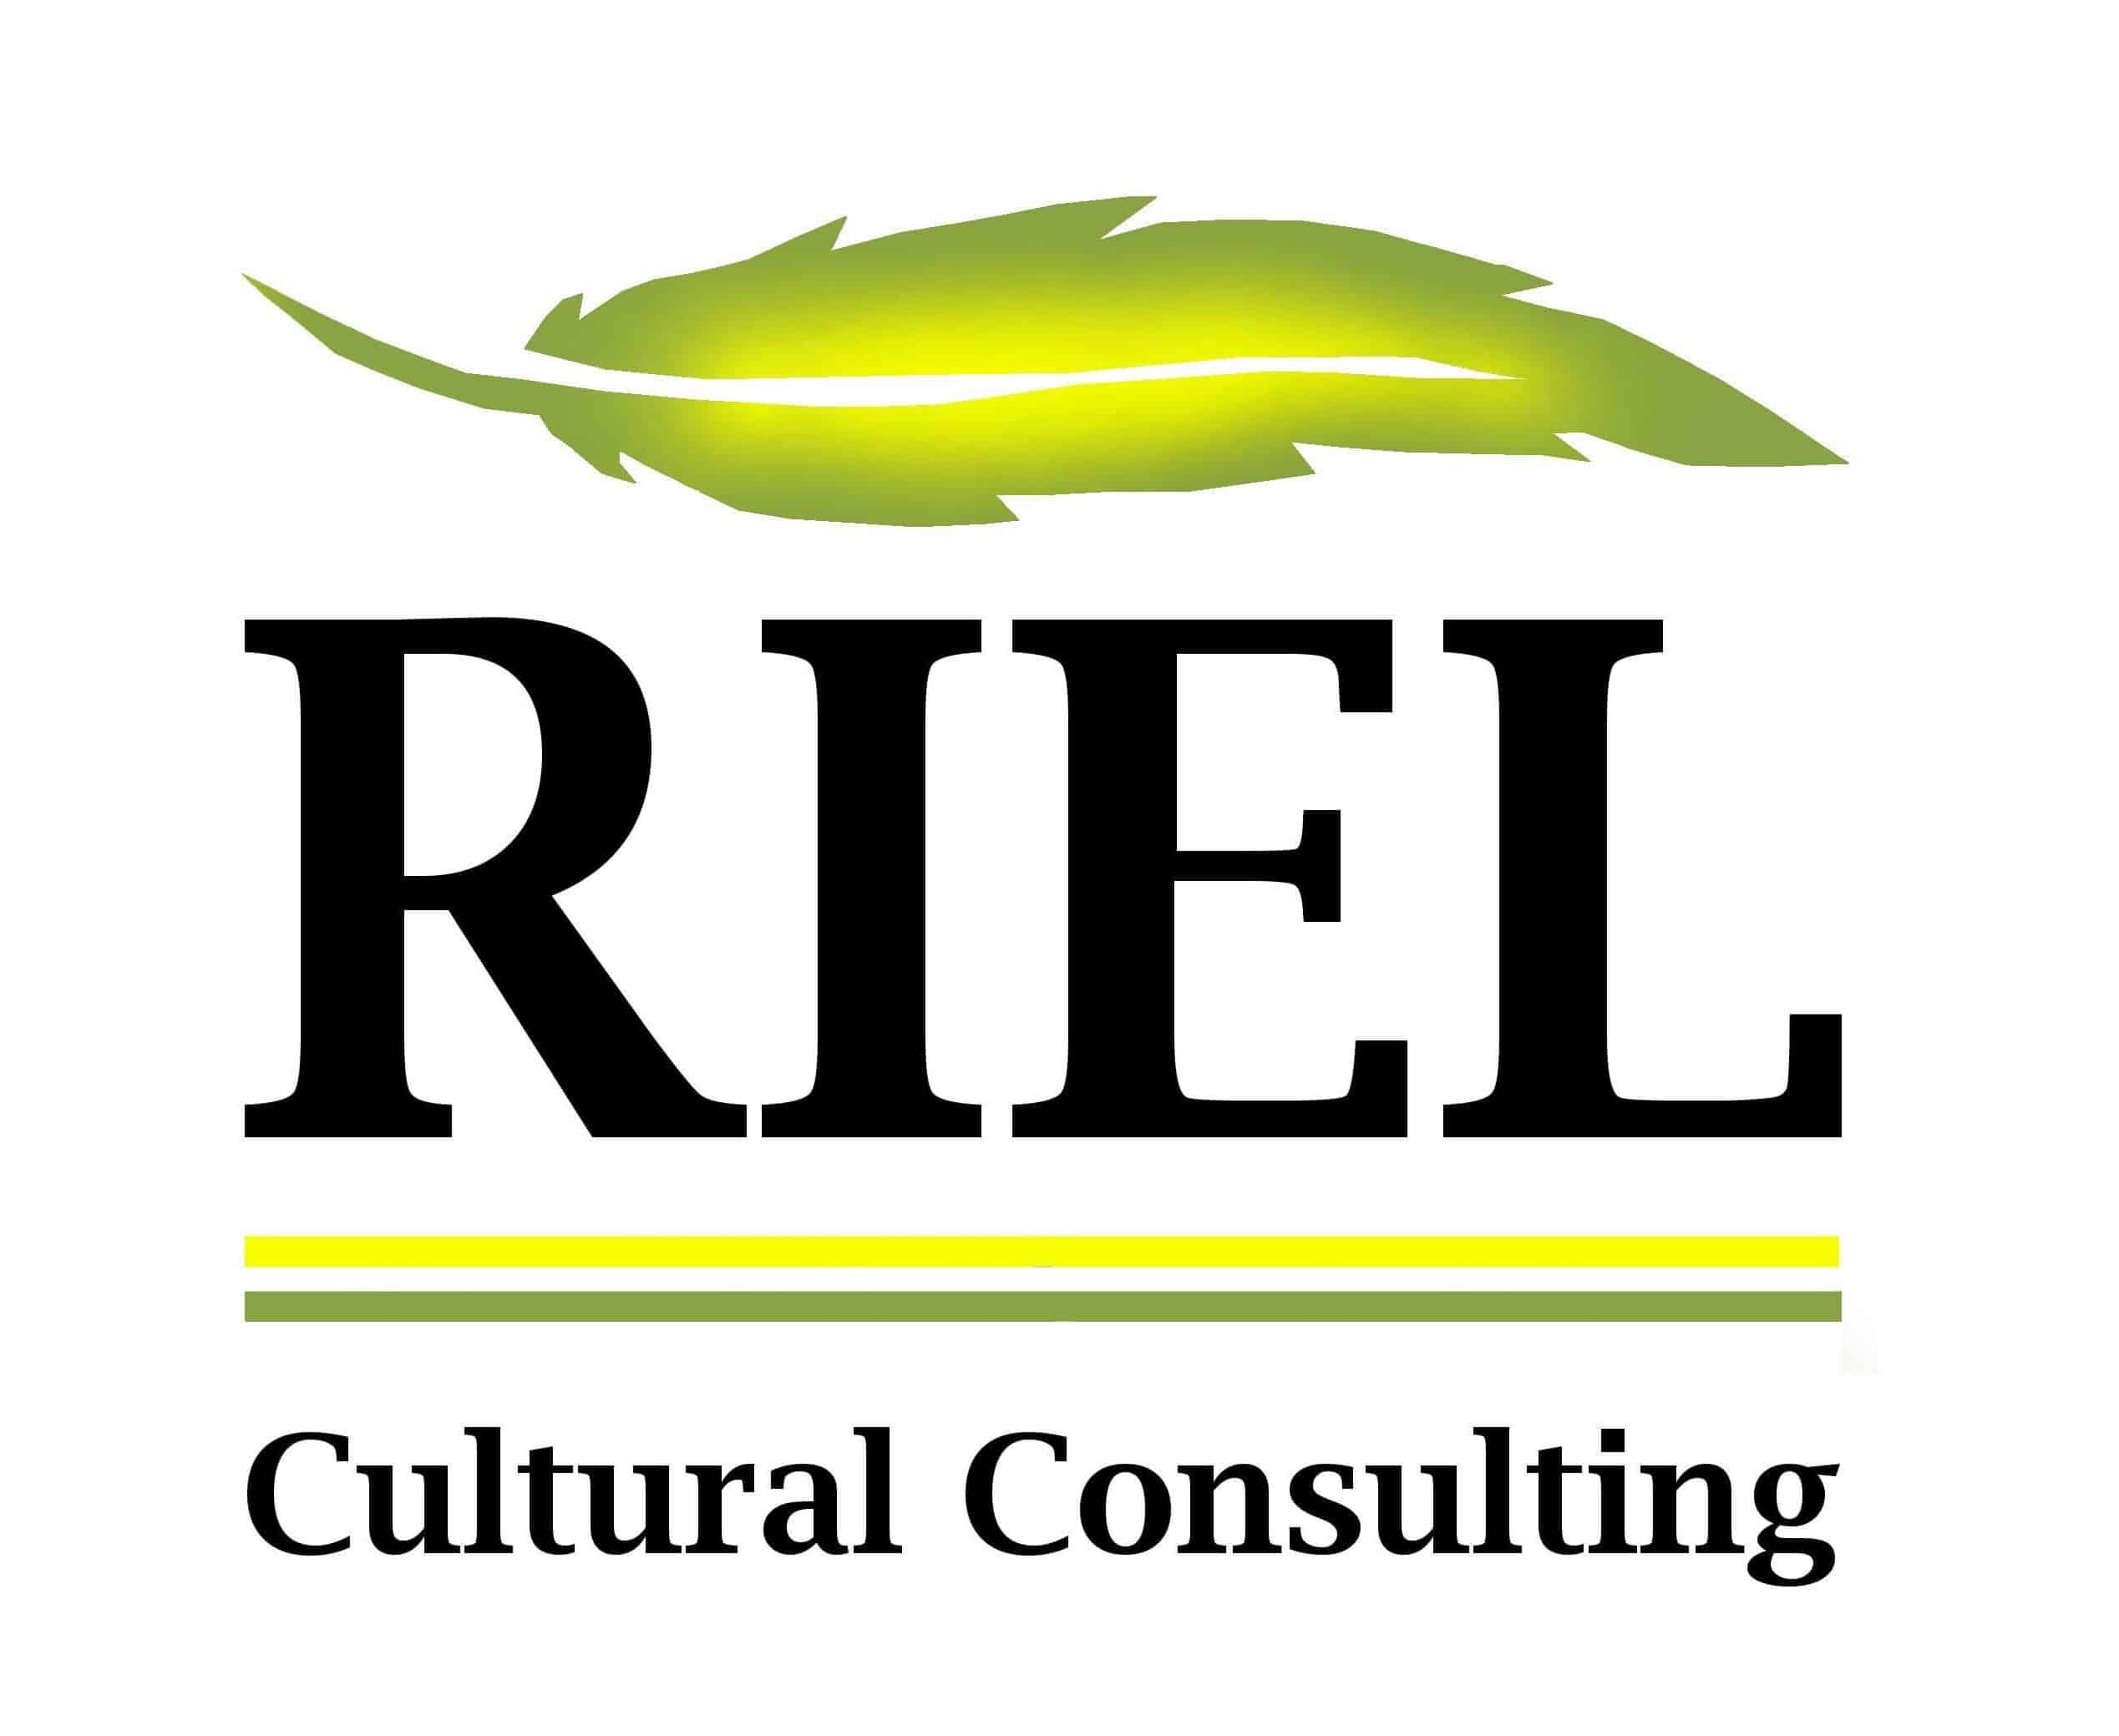 RIEL Cultural Consulting logo